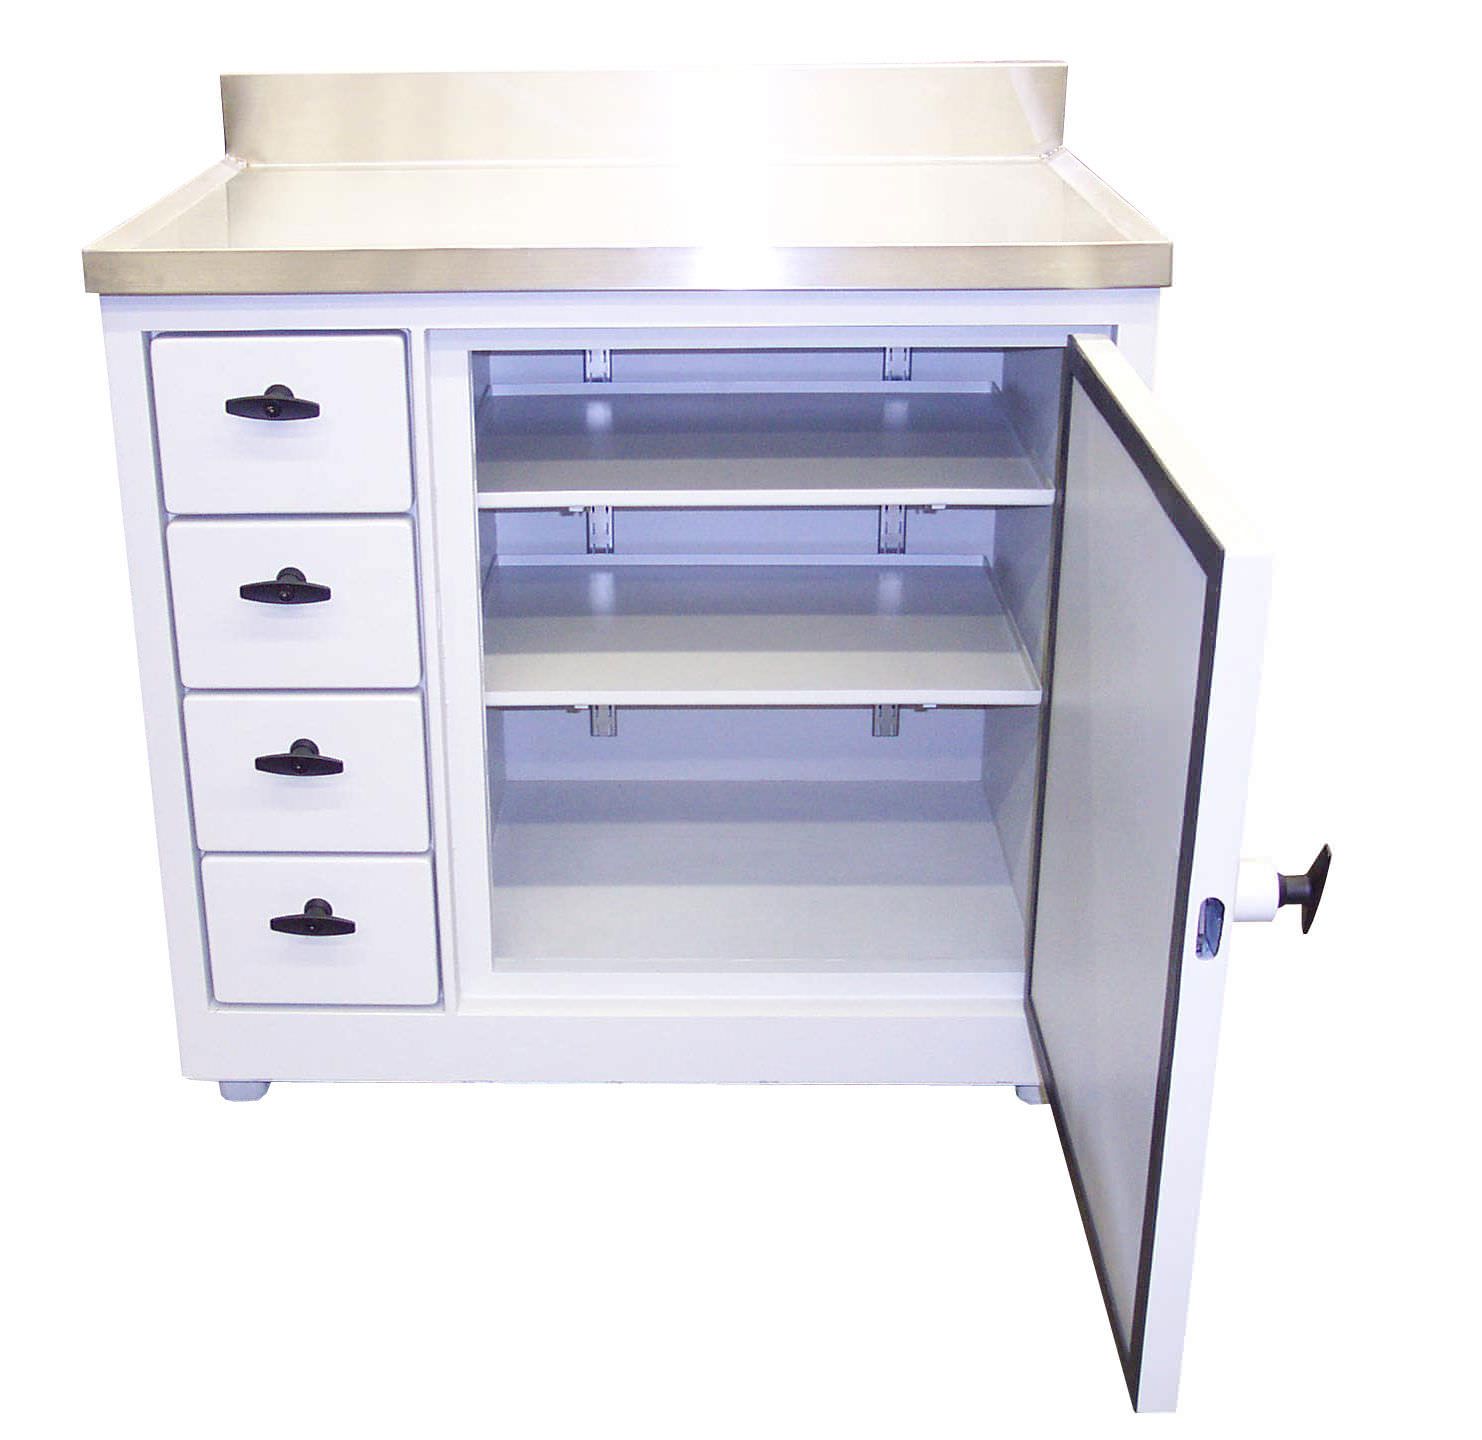 Safety cabinet / laboratory 5530-306x, 5530-3071 Capintec